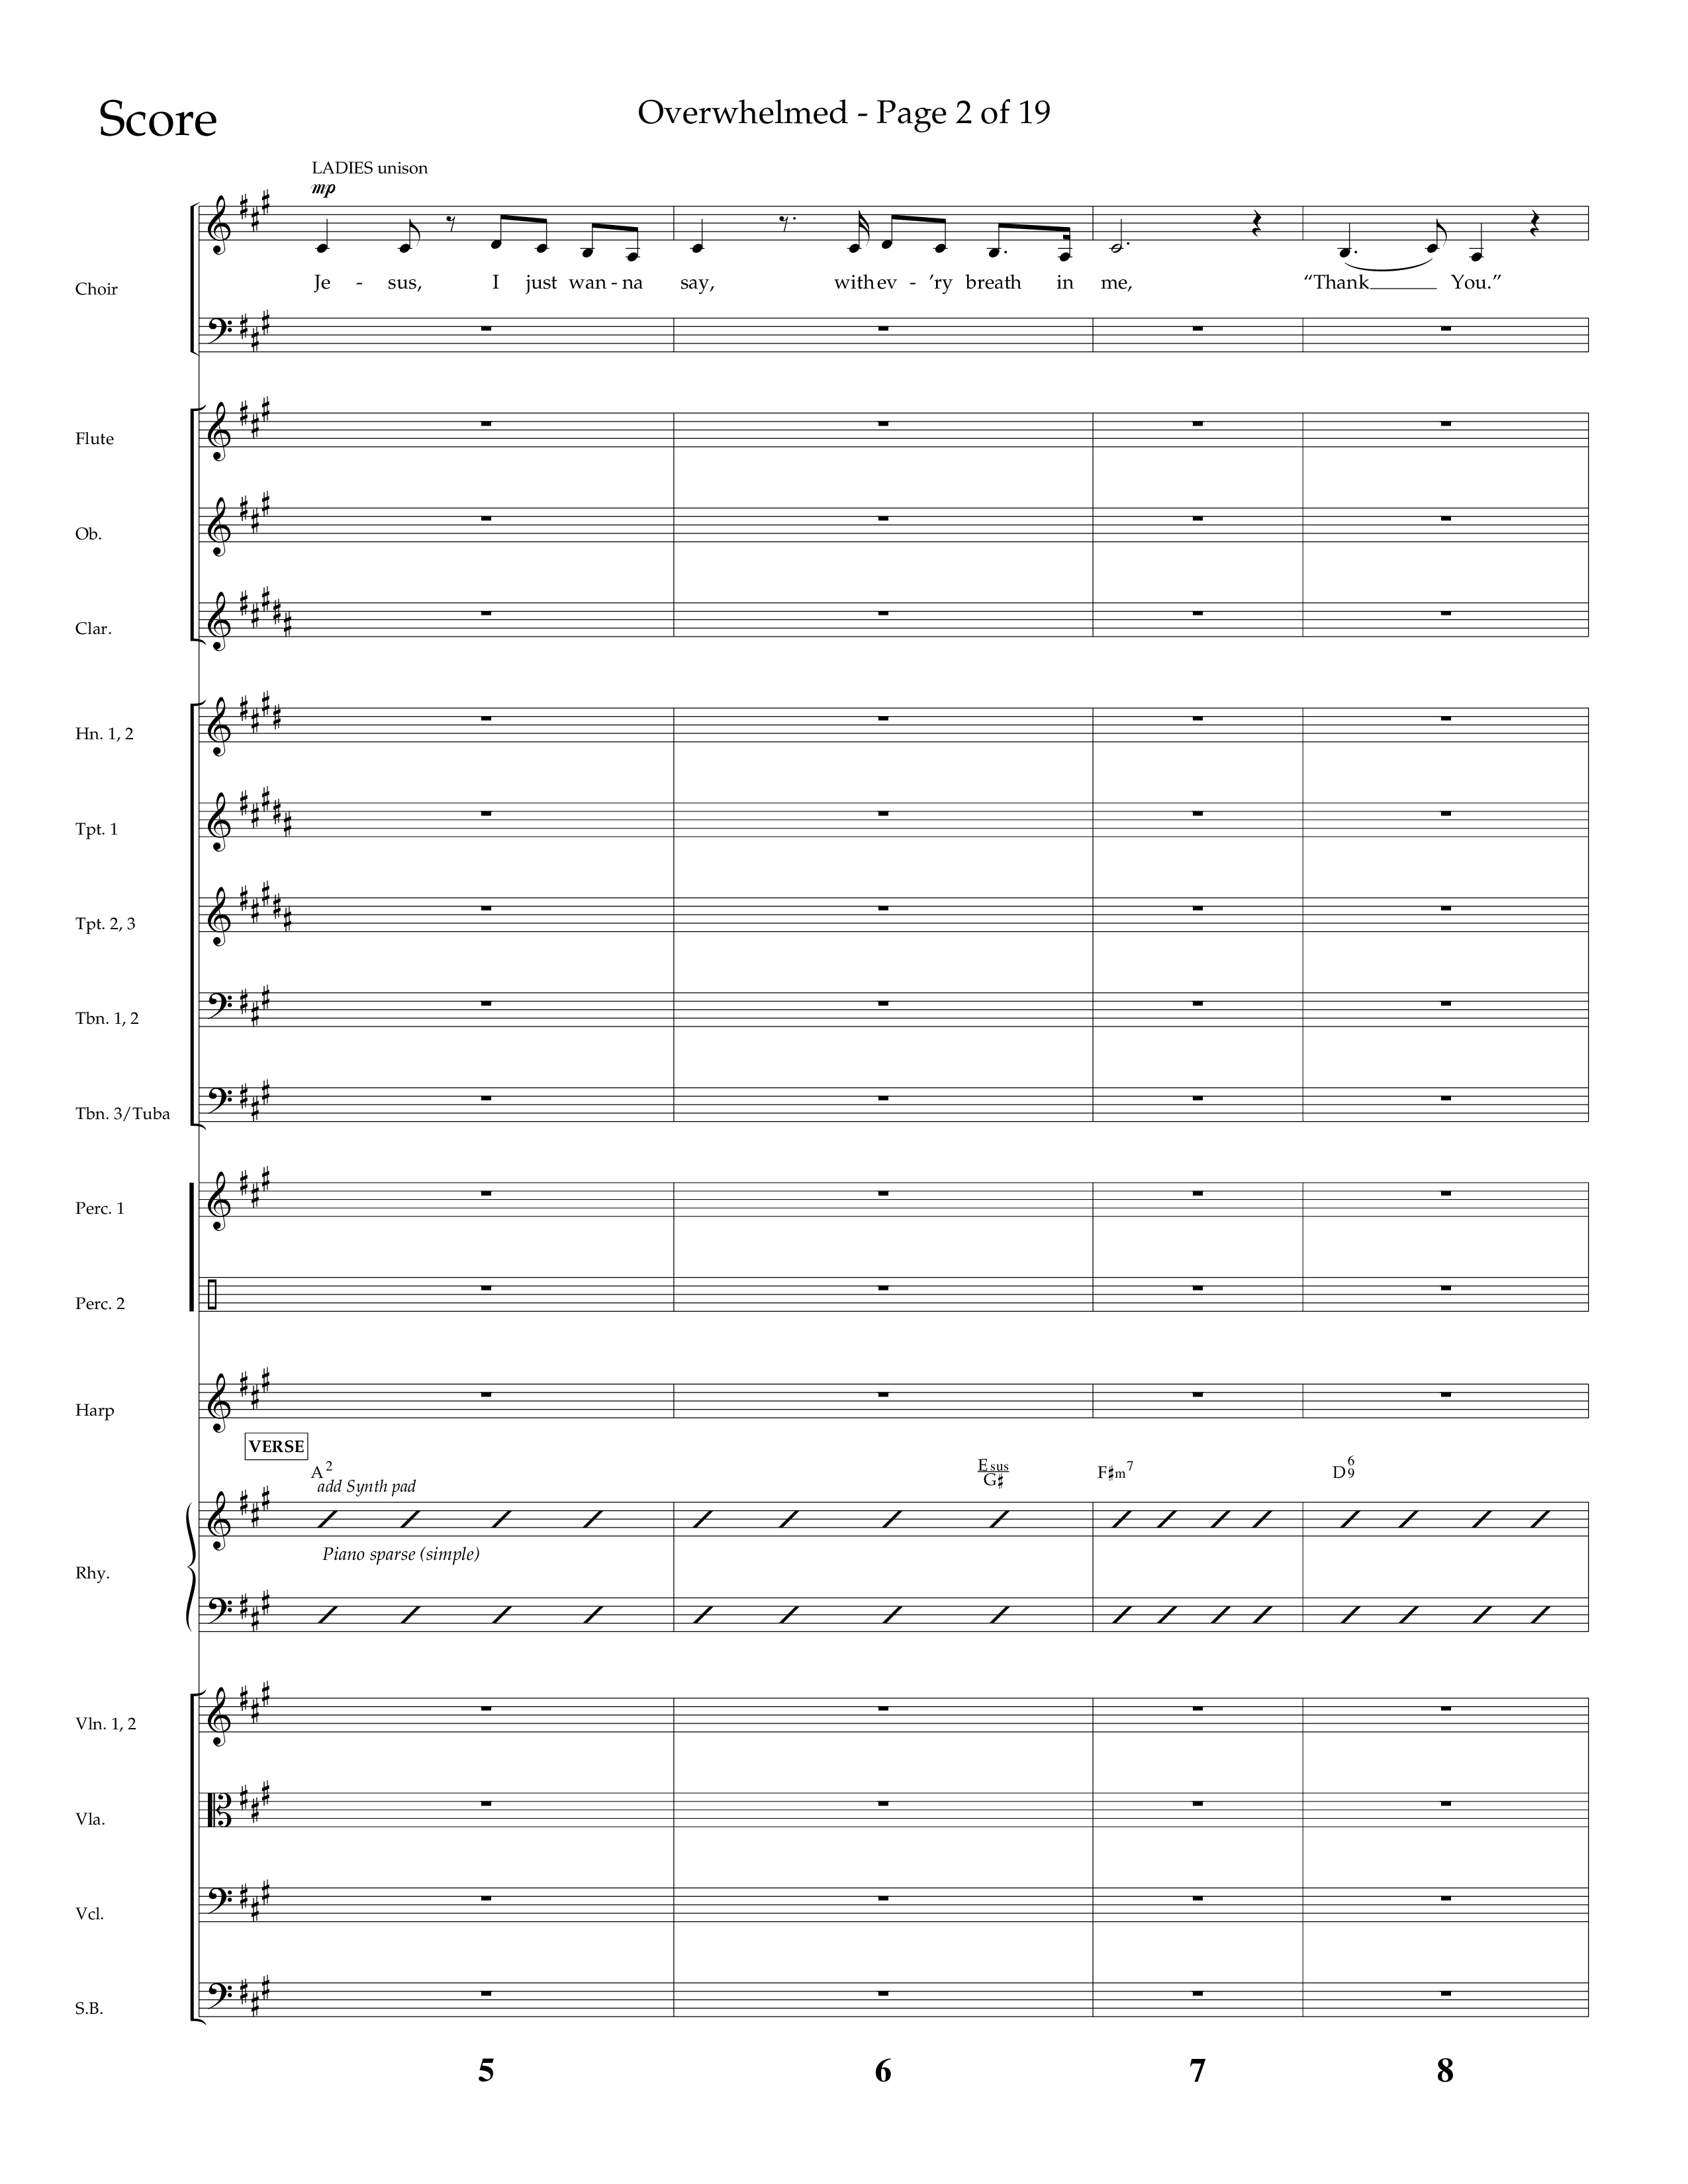 Overwhelmed (Choral Anthem SATB) Conductor's Score (Lifeway Choral / Arr. Danny Zaloudik)